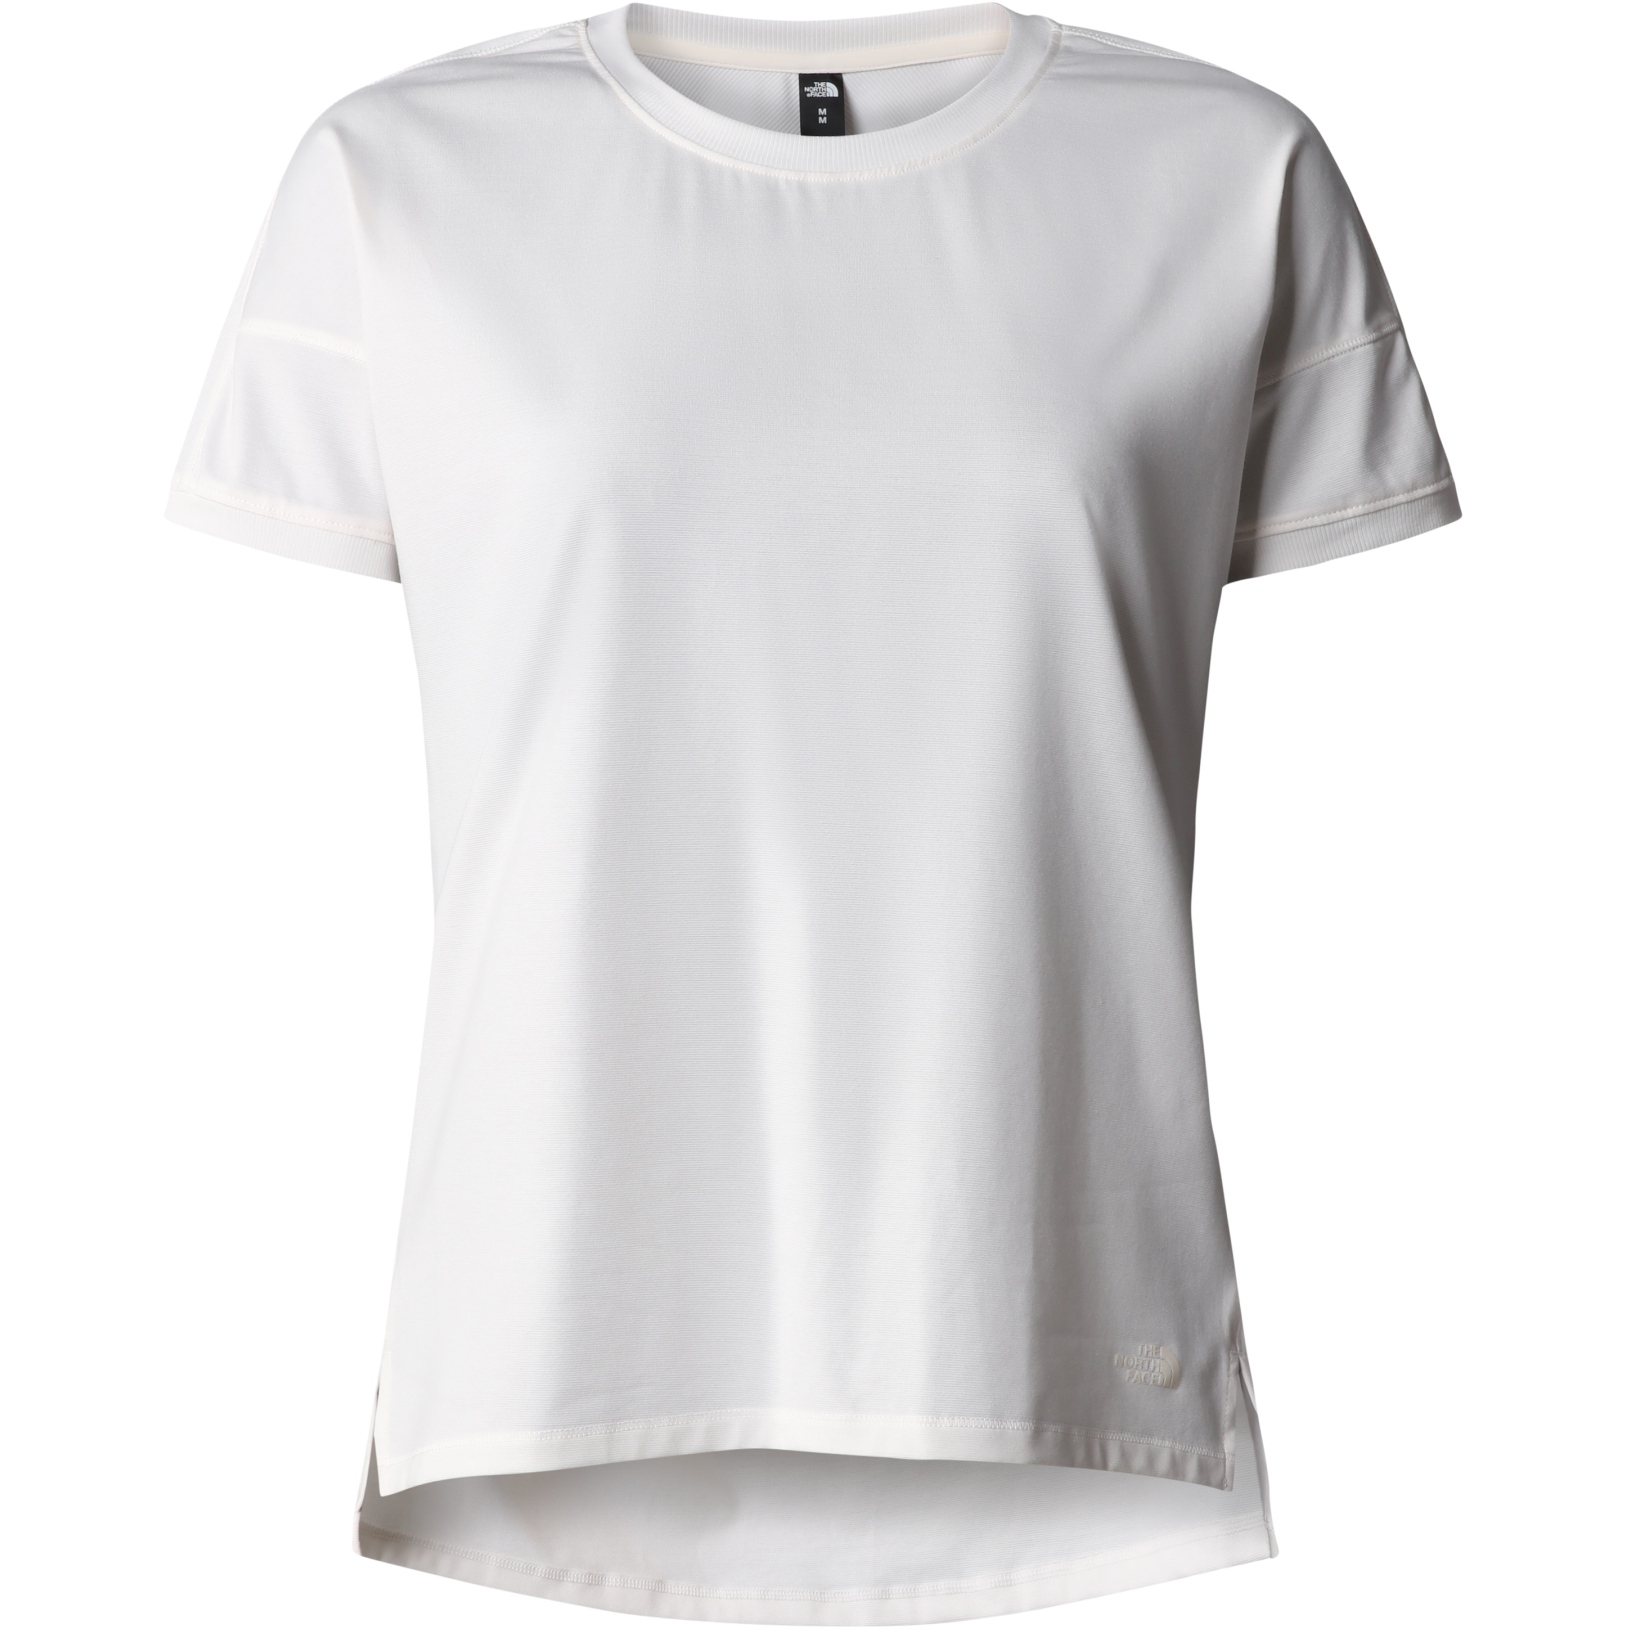 Picture of The North Face Dawn Dream T-Shirt Women - Gardenia White Heather